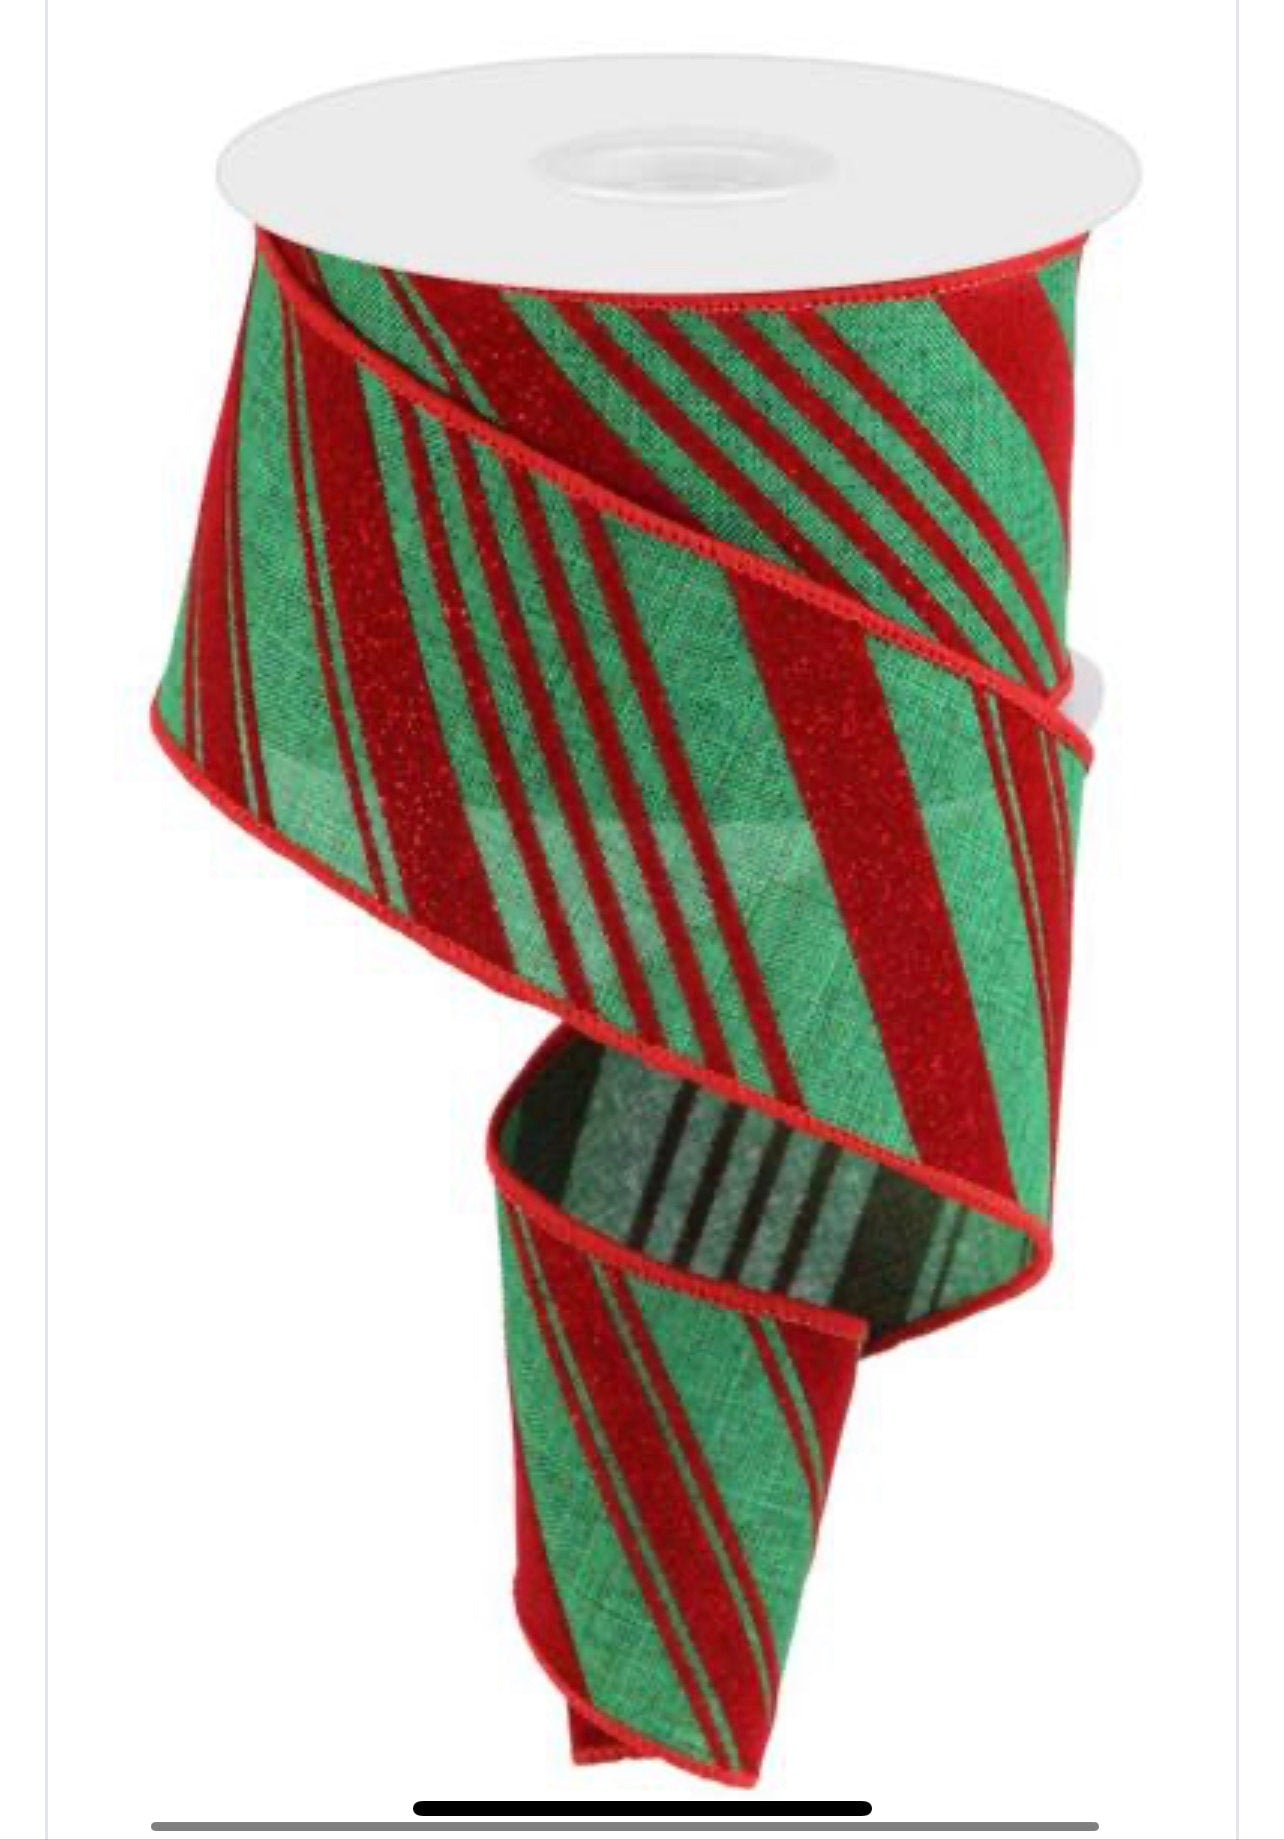 10 YARDS 2.5 inch Ribbon, craft, Christmas Ribbon, Gift Wrap Ribbon, Red Green Velvet Diagonal Stripe Ribbon, Wreath Supplies, Floral Supply